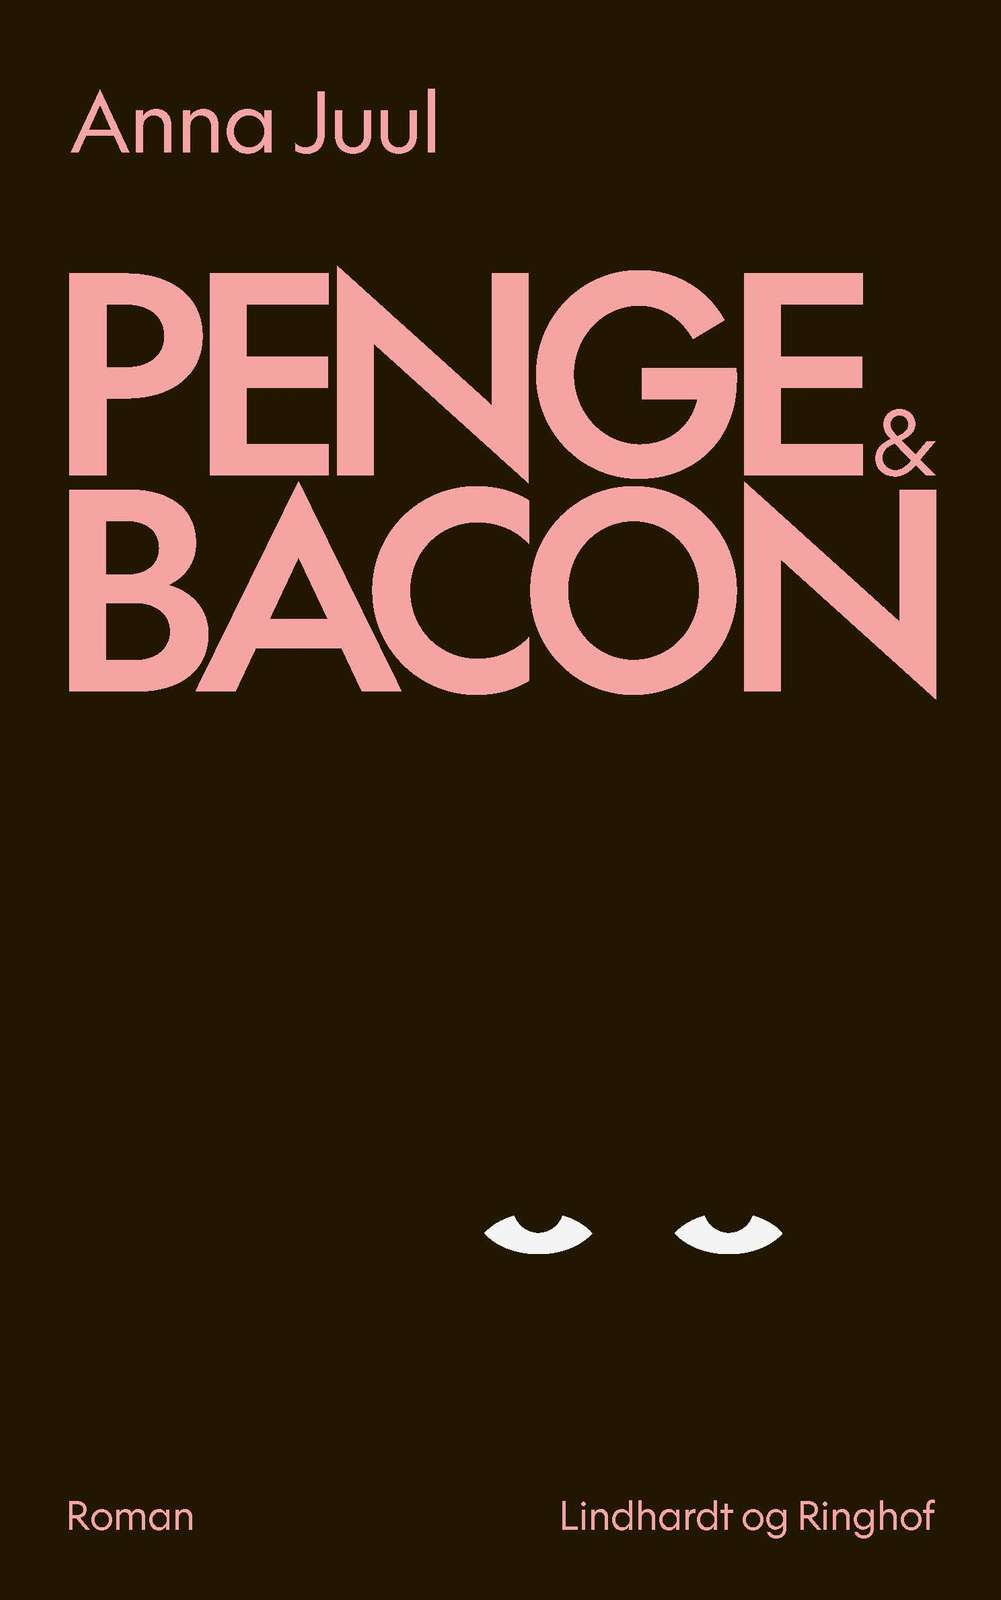 Anna Juul - Penge & Bacon. PR-foto.